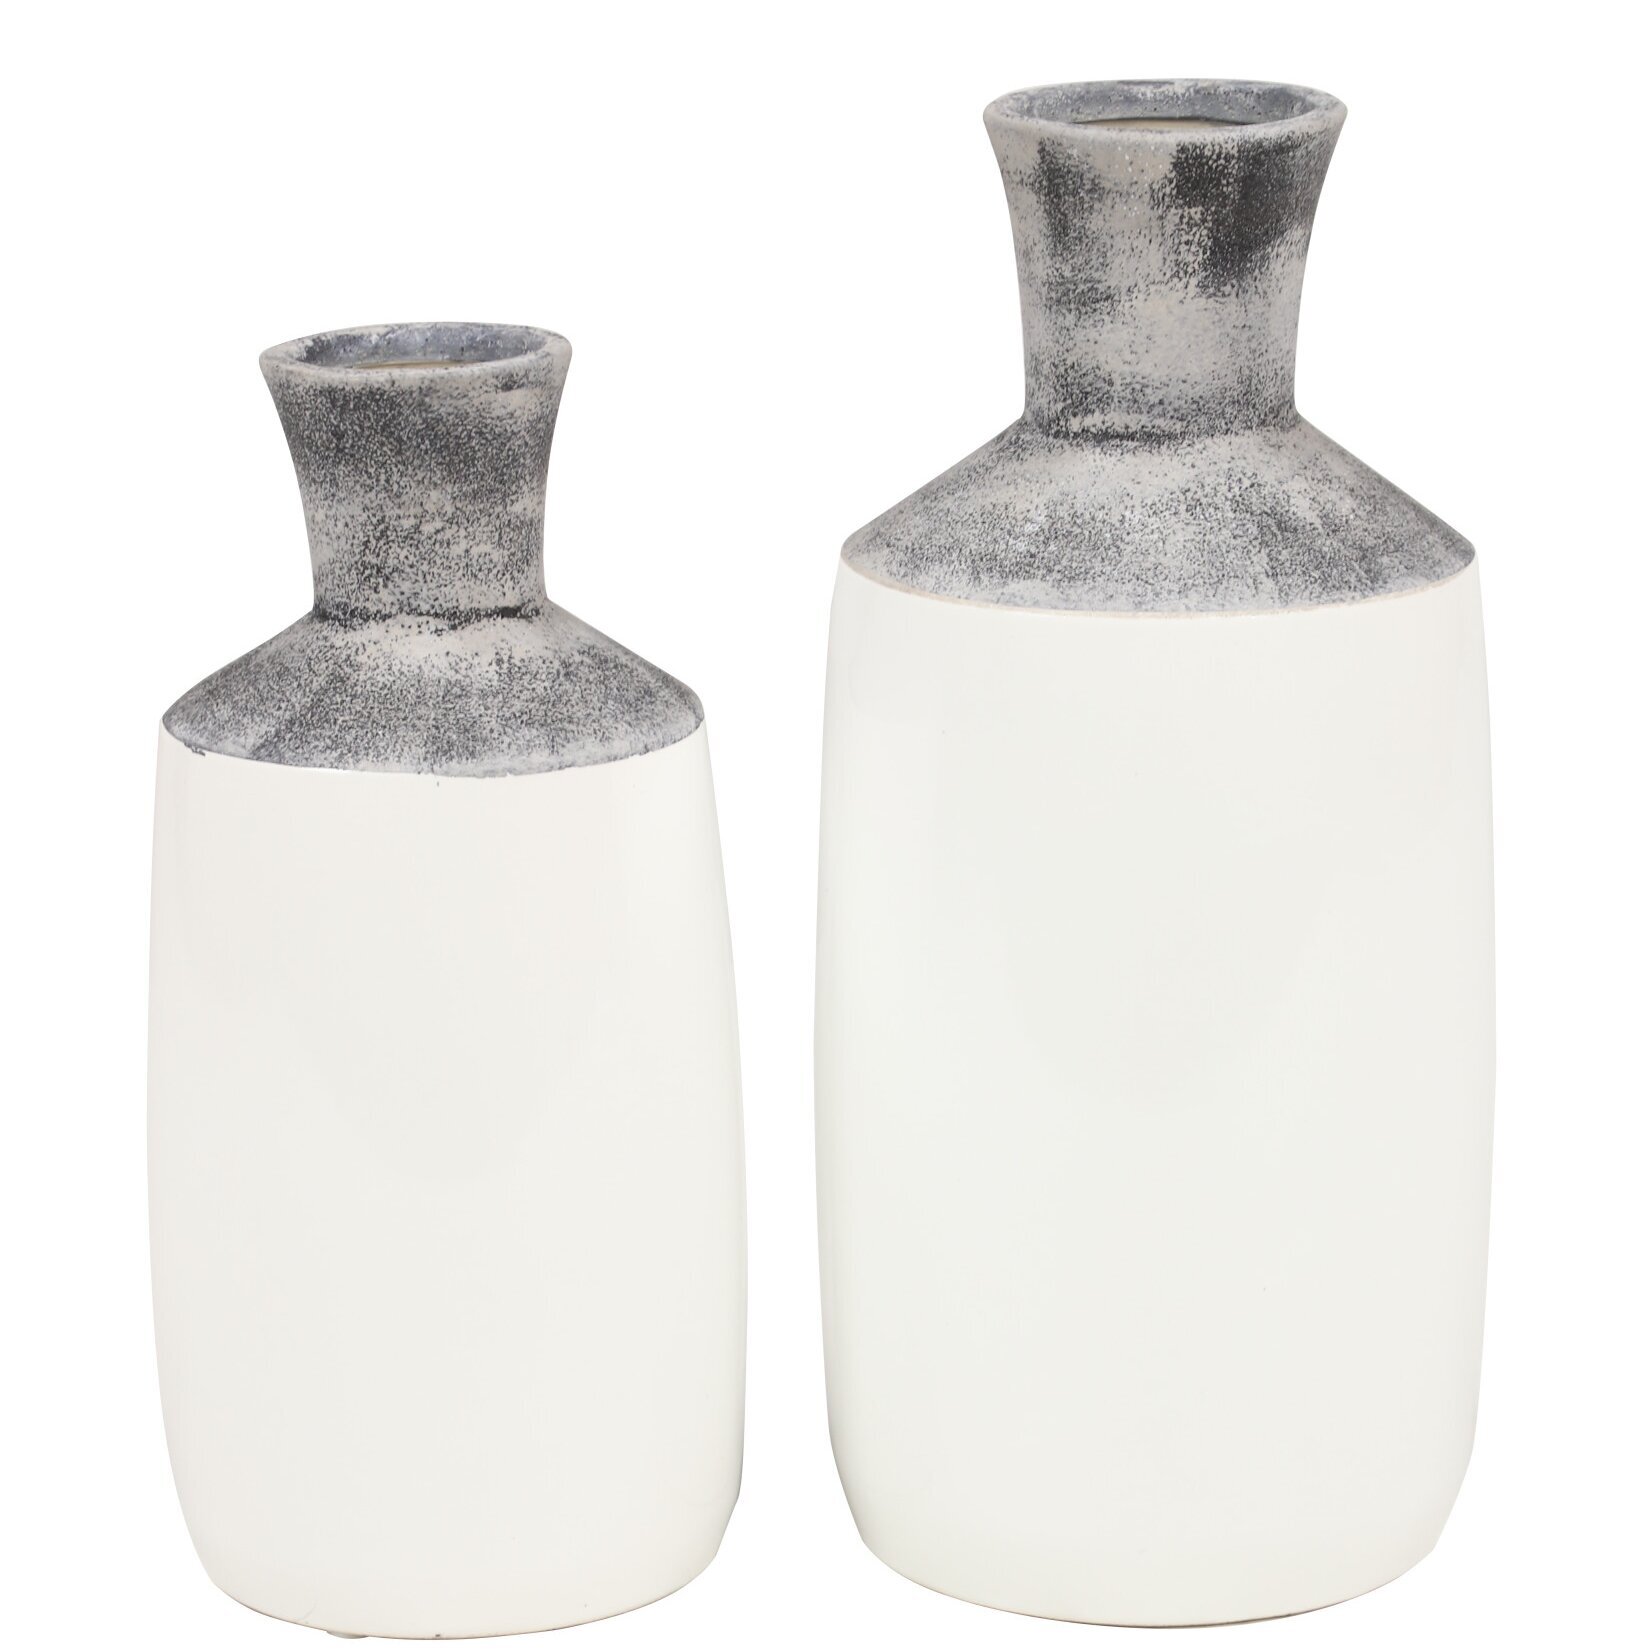 Fairman Textured Matte Ceramic 2 Piece Table Vase Set, $81 